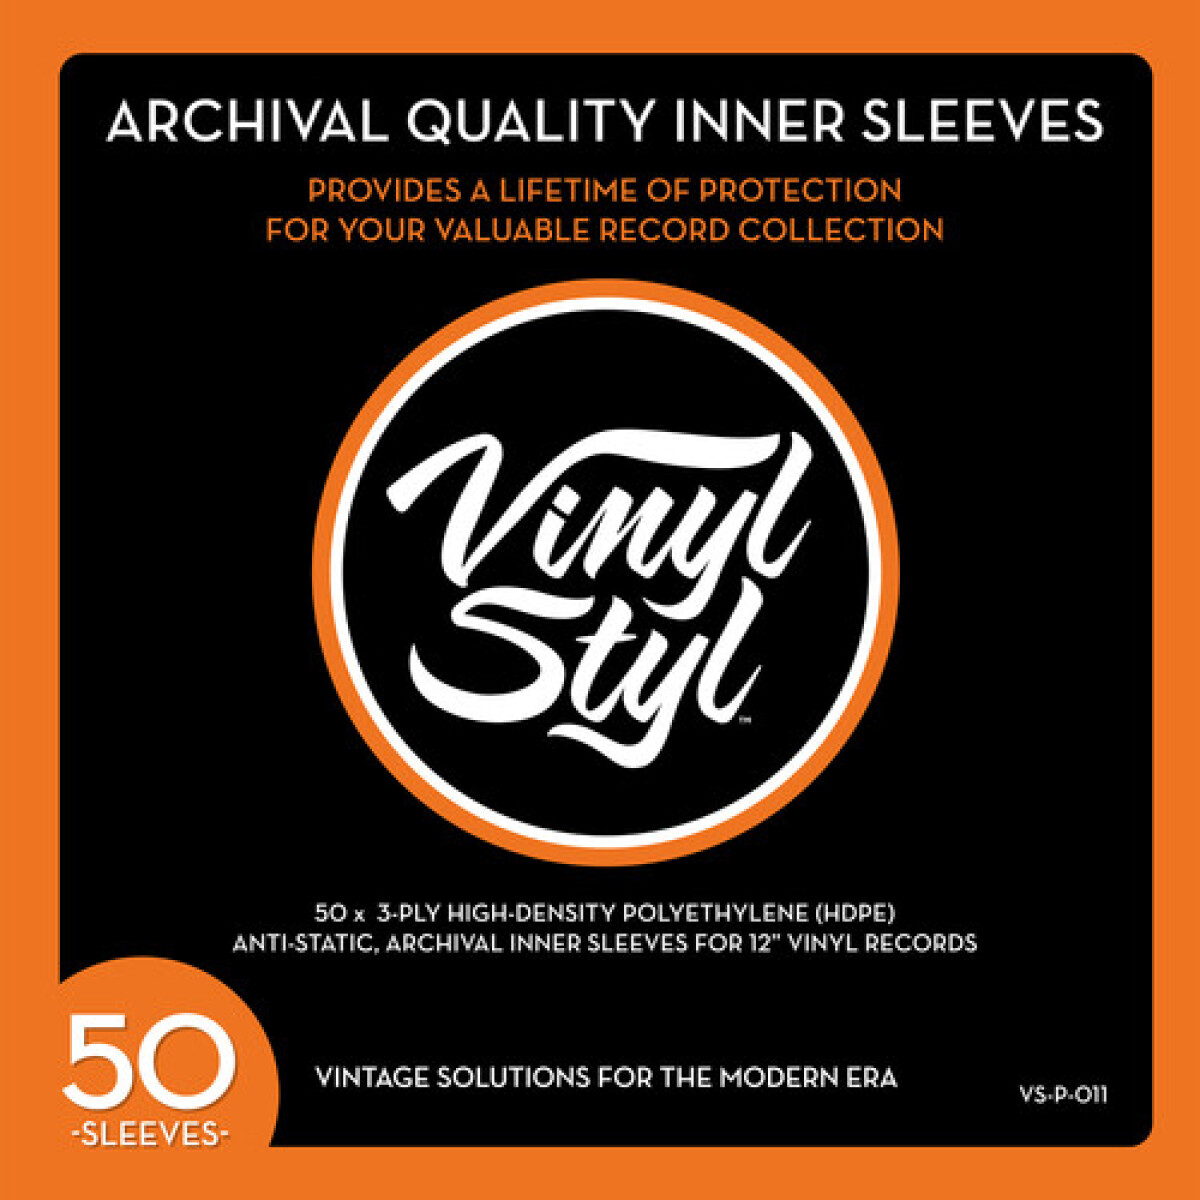 Vinyl Styl Archive Quality Inner Record Sleeve 